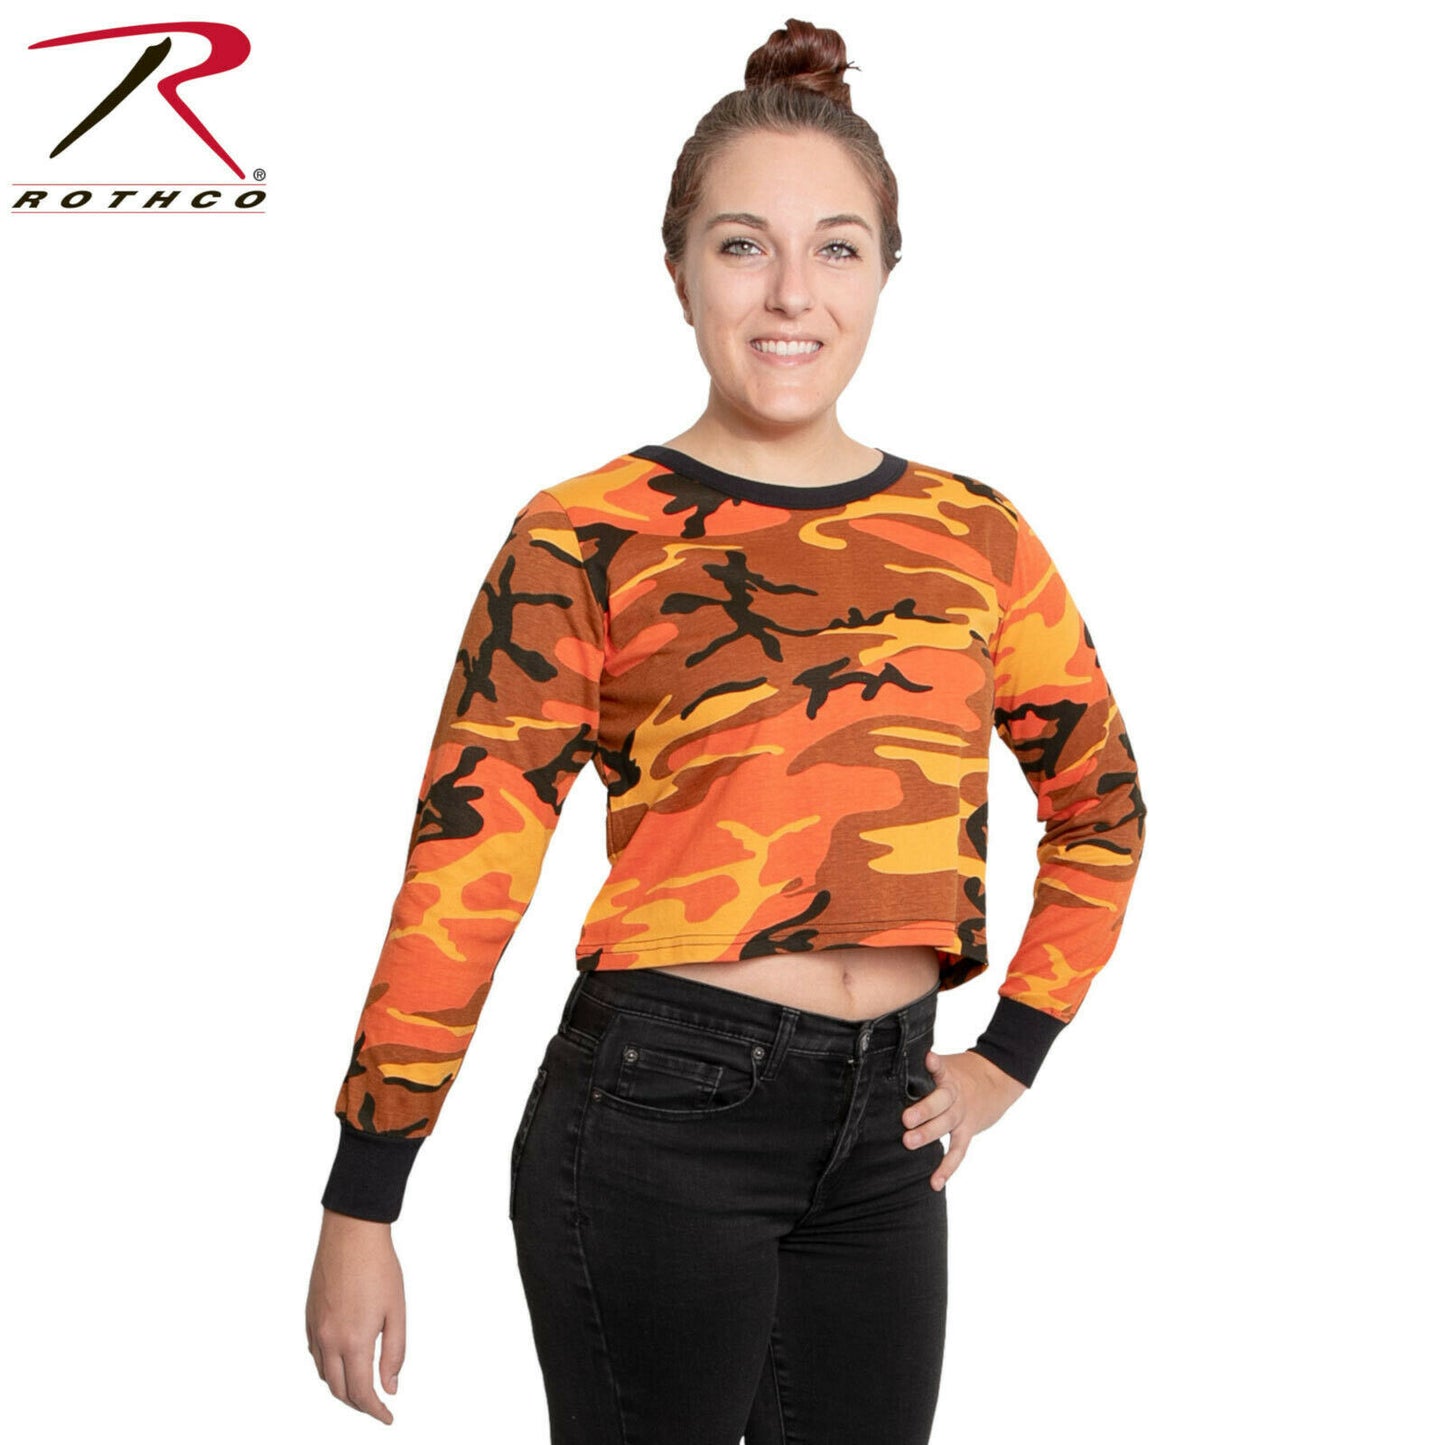 Rothco Women's Savage Orange Camo Long Sleeve Crop Top T-Shirt - Poly Cotton Tee